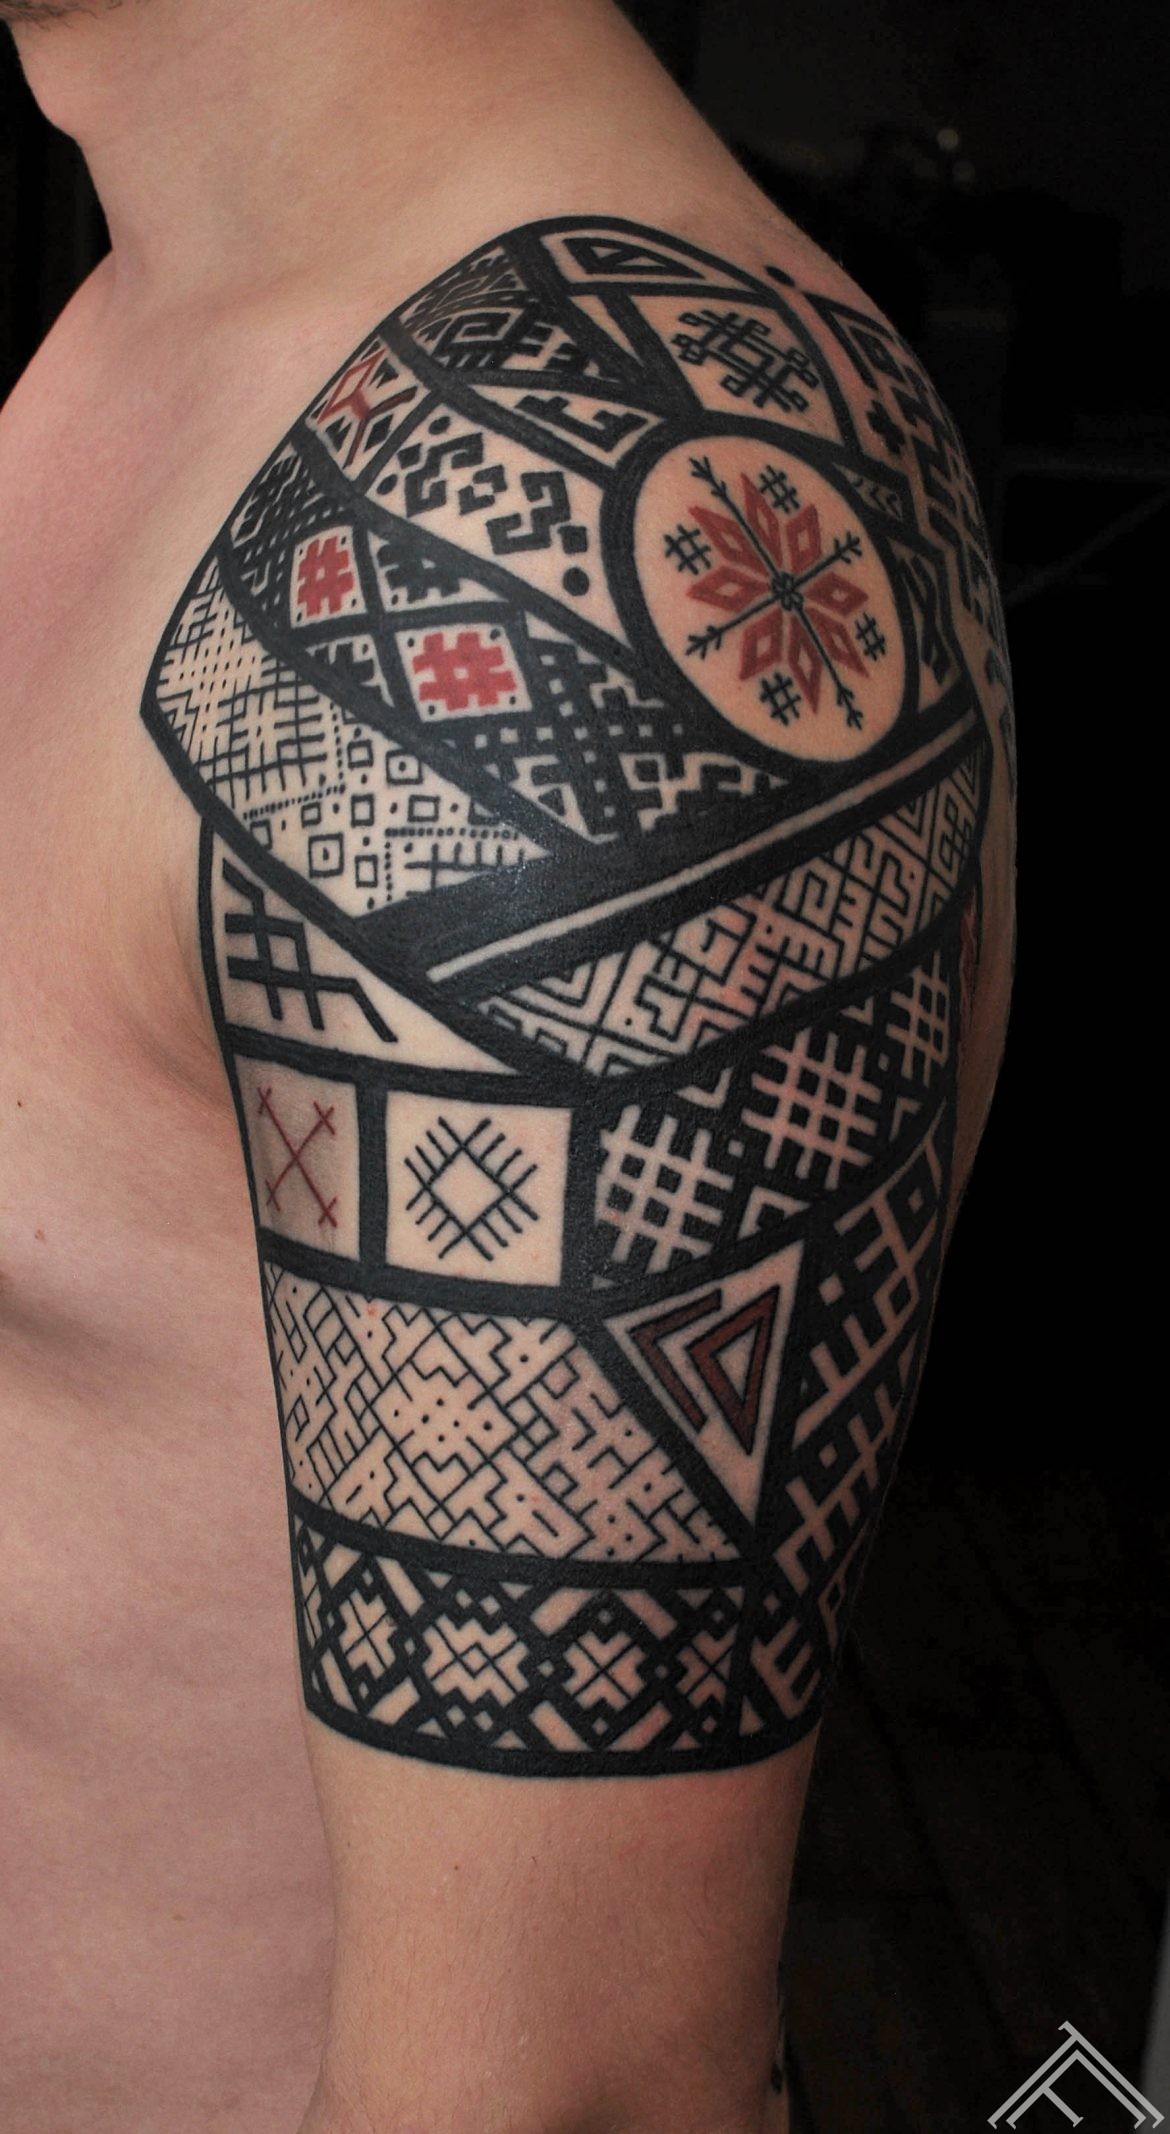 janisandersons-tattoo-tattoofrequency-art-riga-latviesuzimes-latviesu-latvija-simbols-symbol-latviansymbol-studija-salons-tetovesana-jumis-auseklis